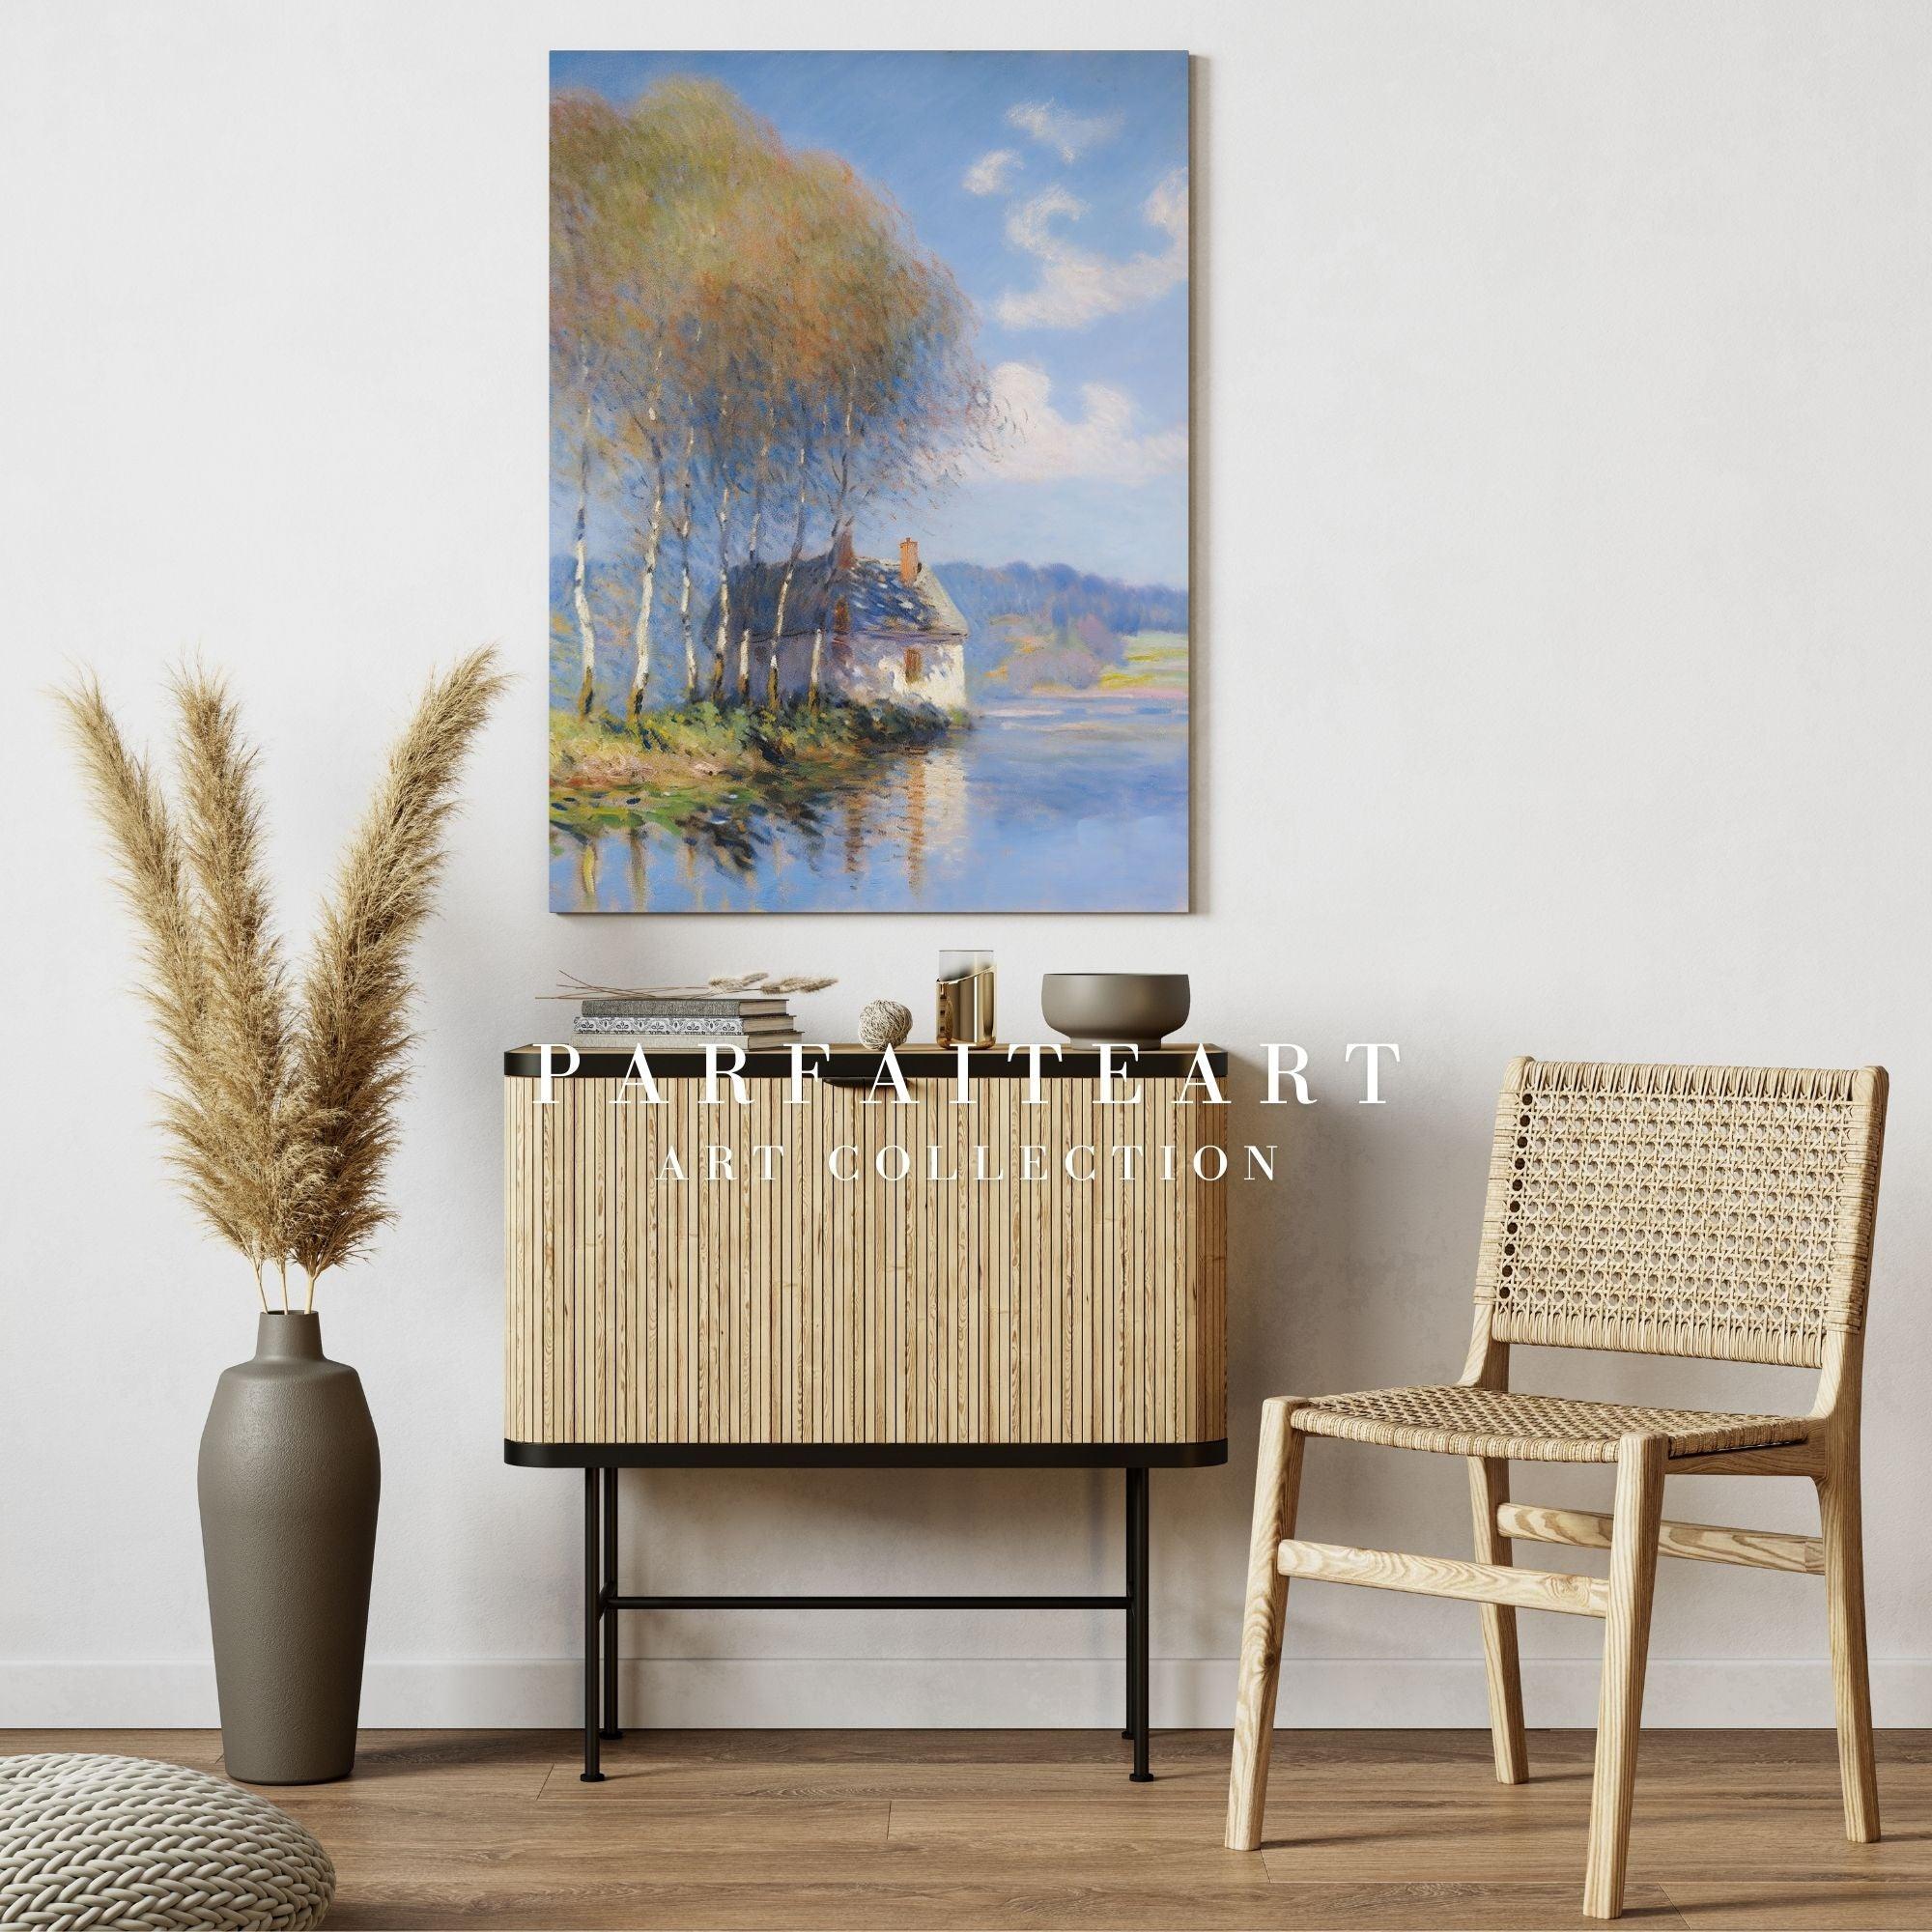 Impressionism,Wall art,Canvas Prints,Home Decor,Framed IC 3 - ParfaiteArt